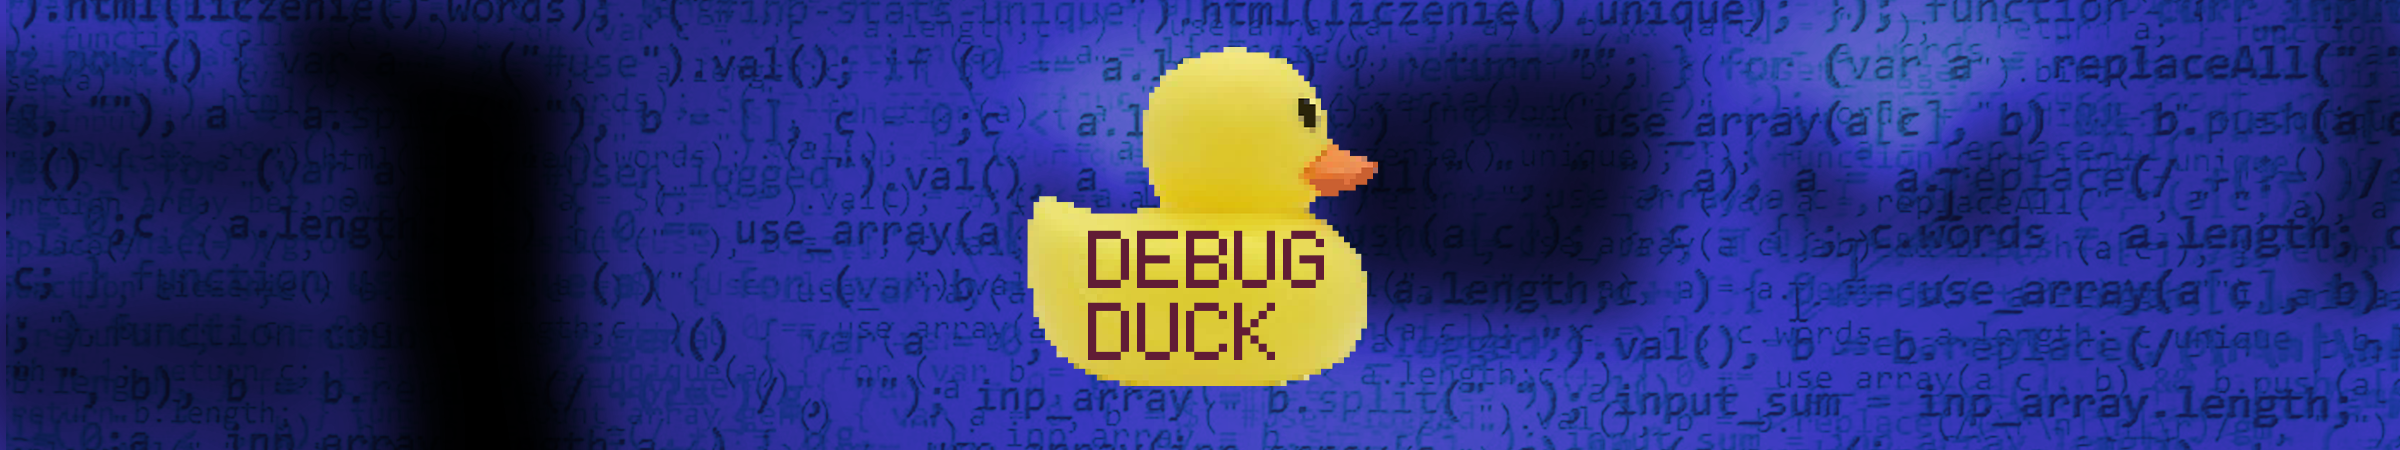 Debug Duck